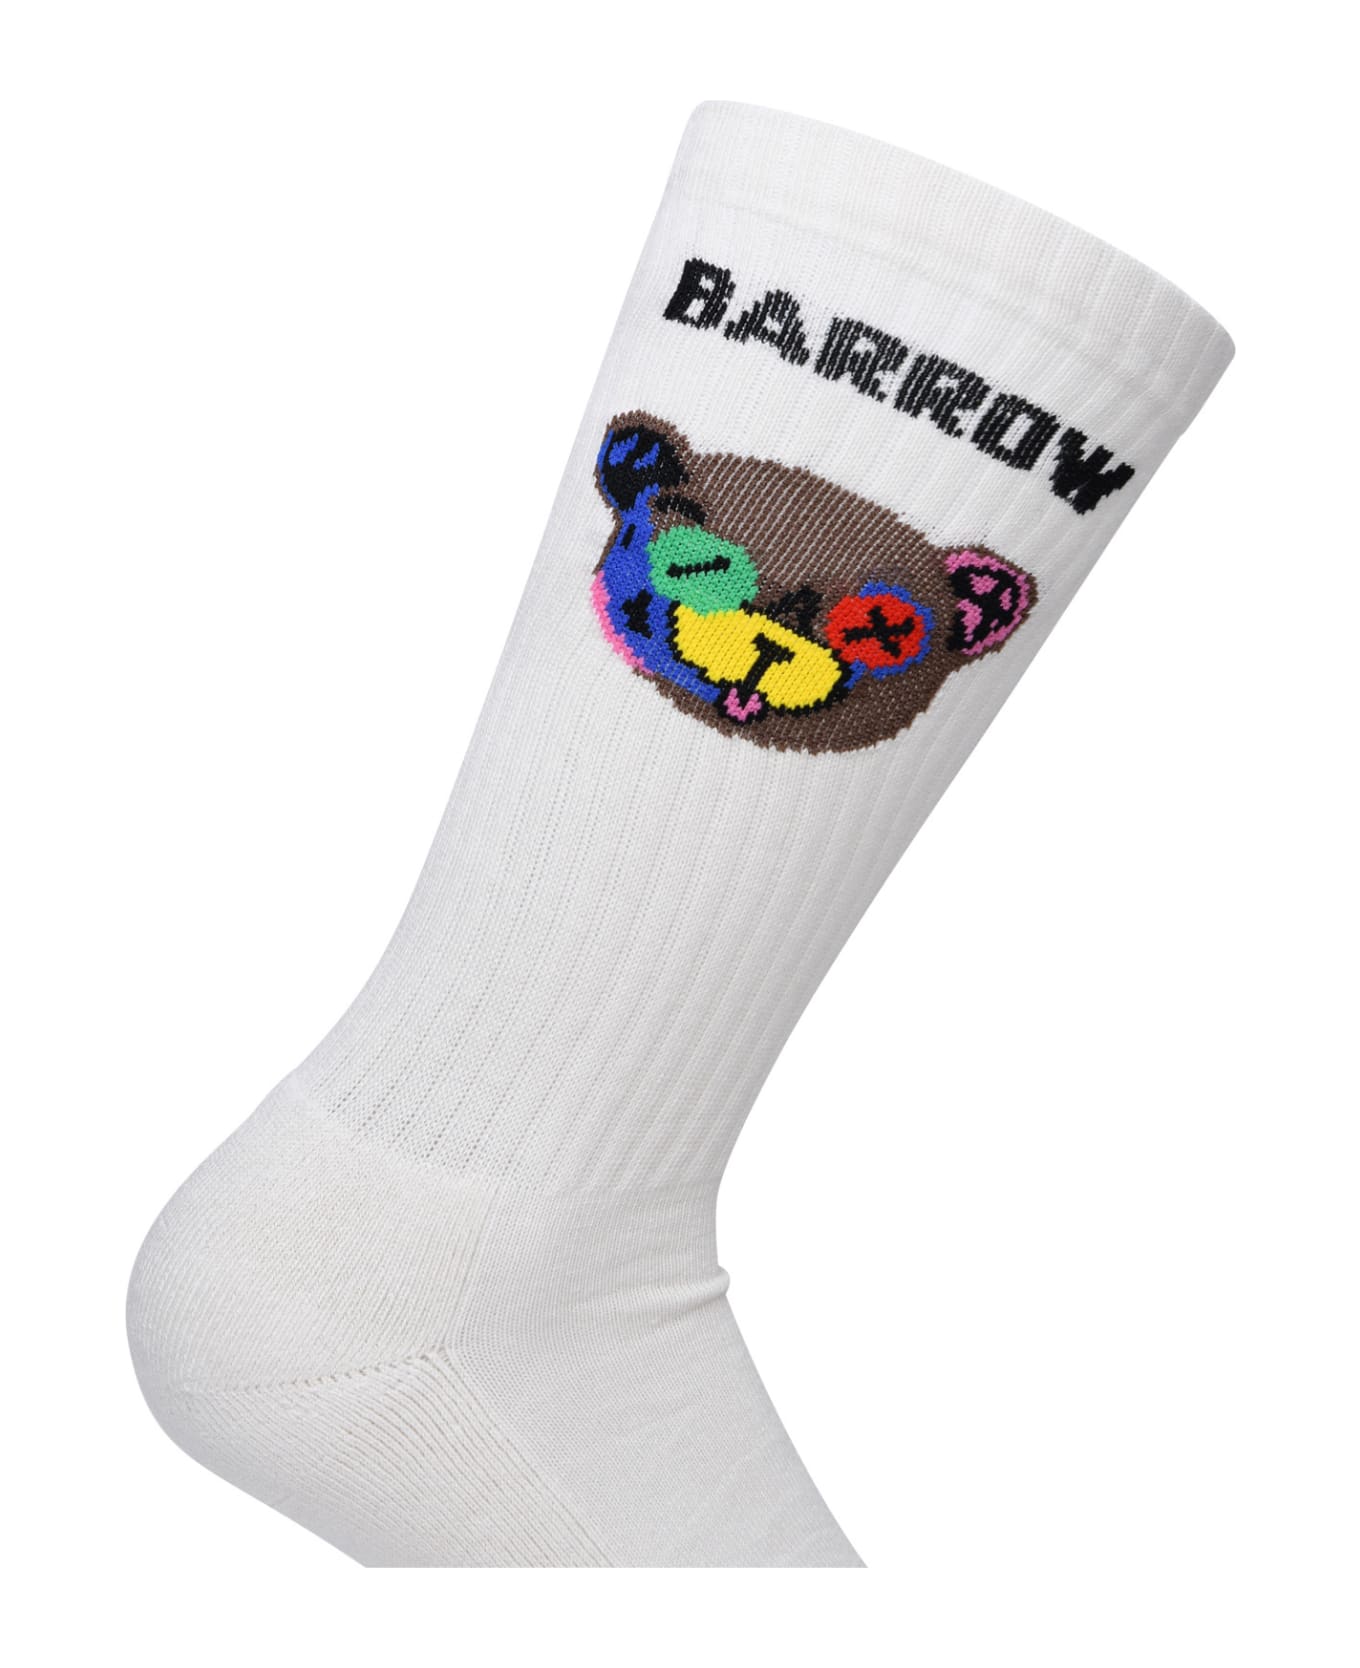 Barrow Ivory Cotton Blend Socks - Turtledove